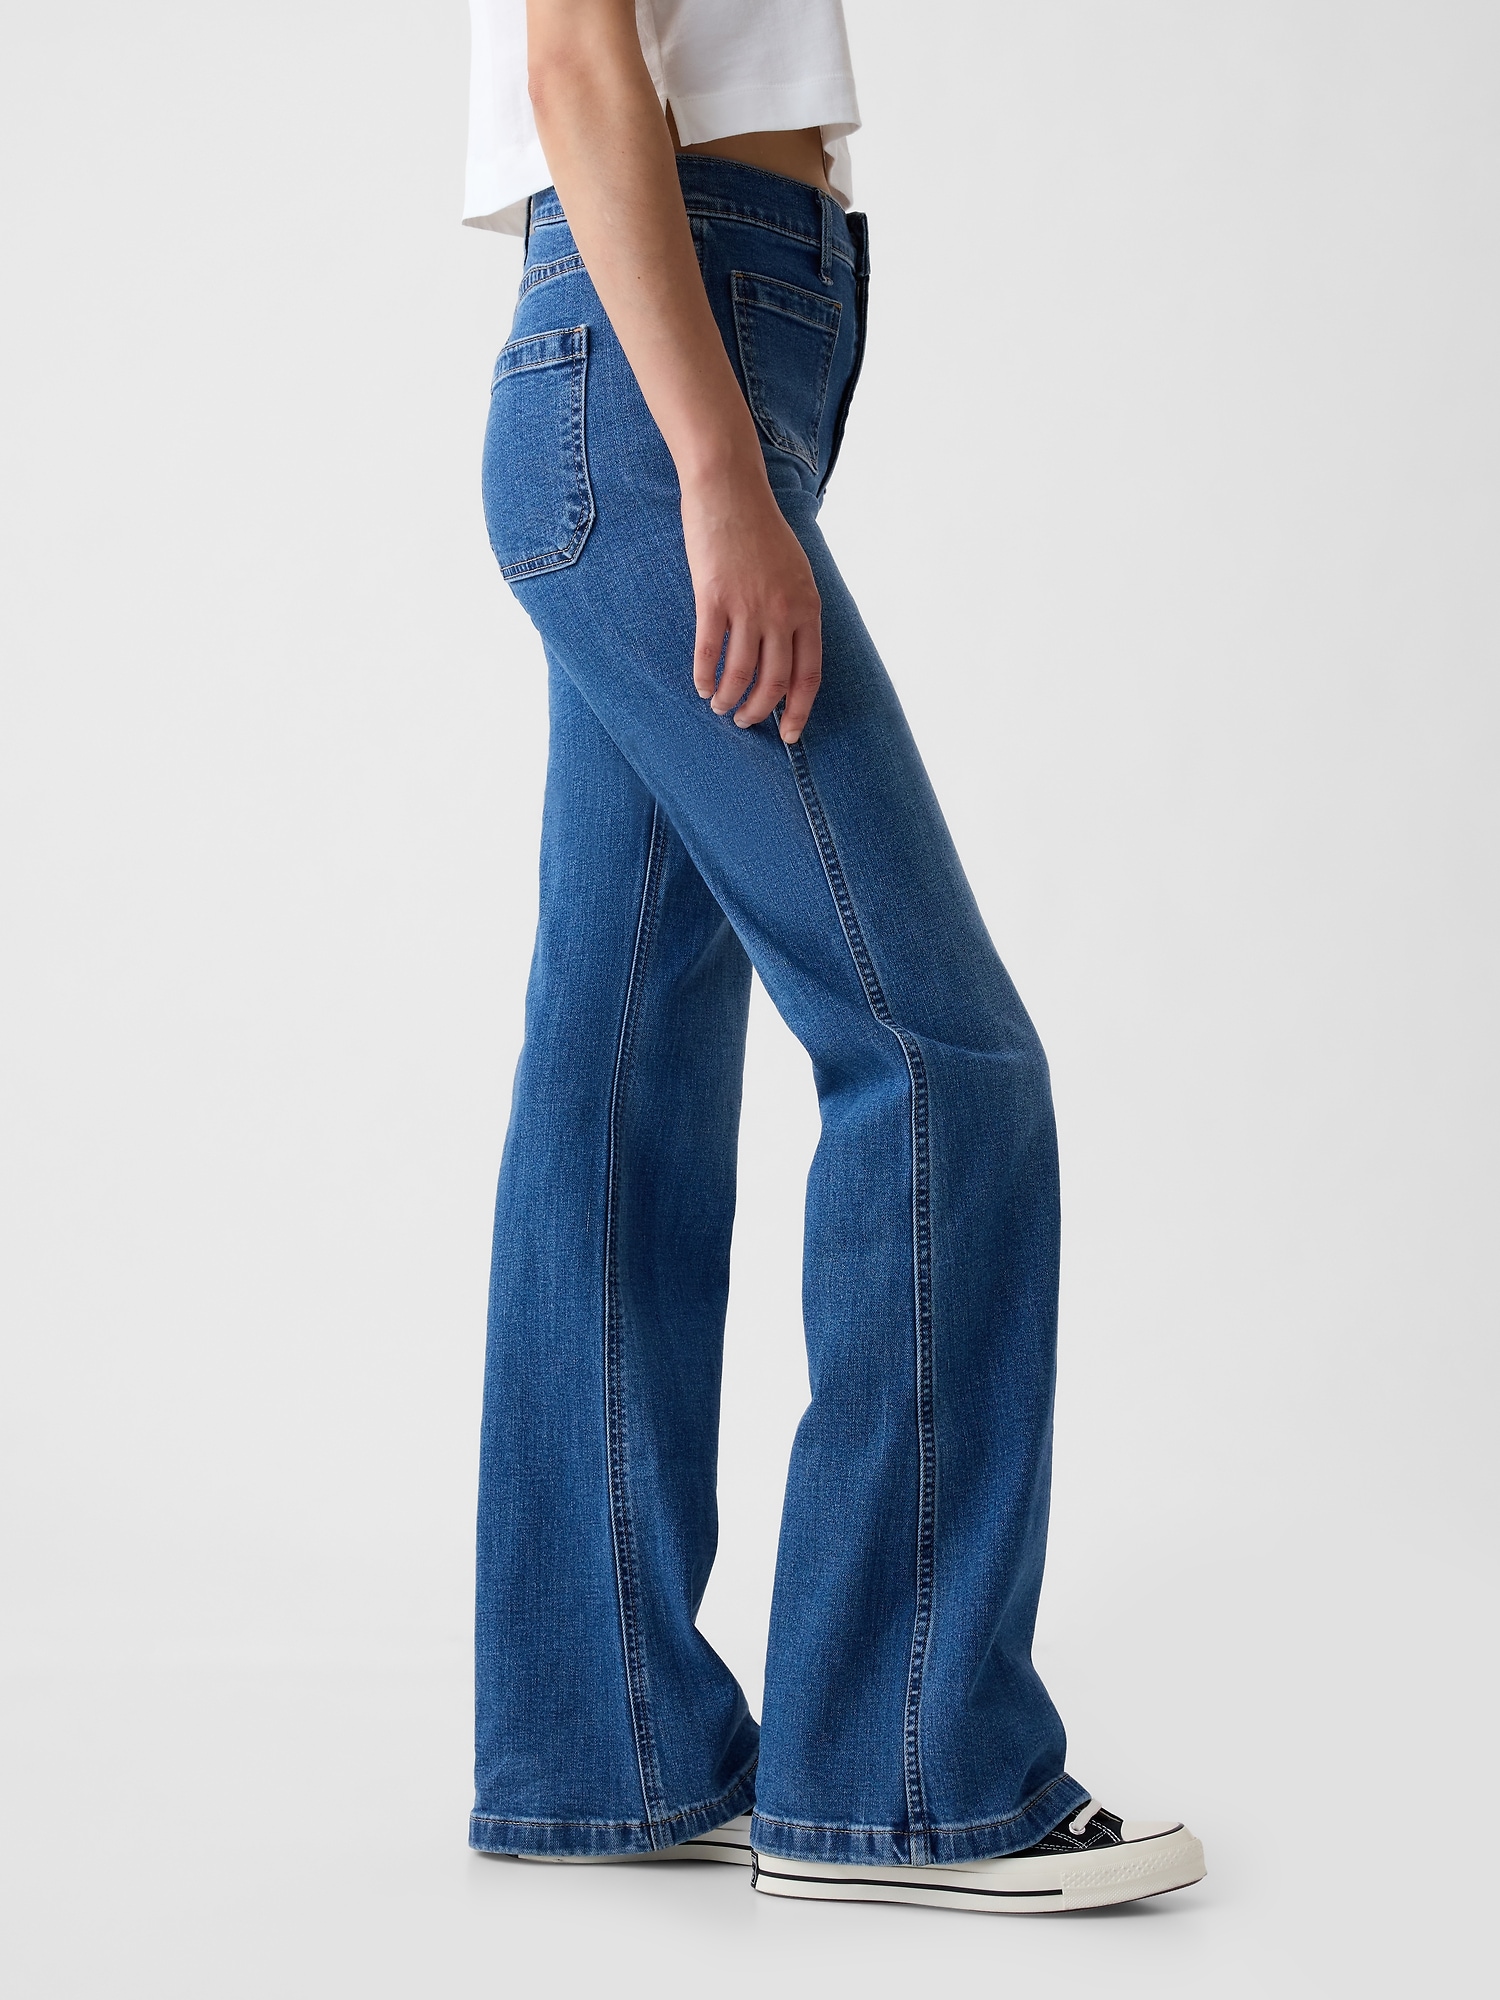 70s BALL denim high waisted bell bottom jeans sz 30 / vintage